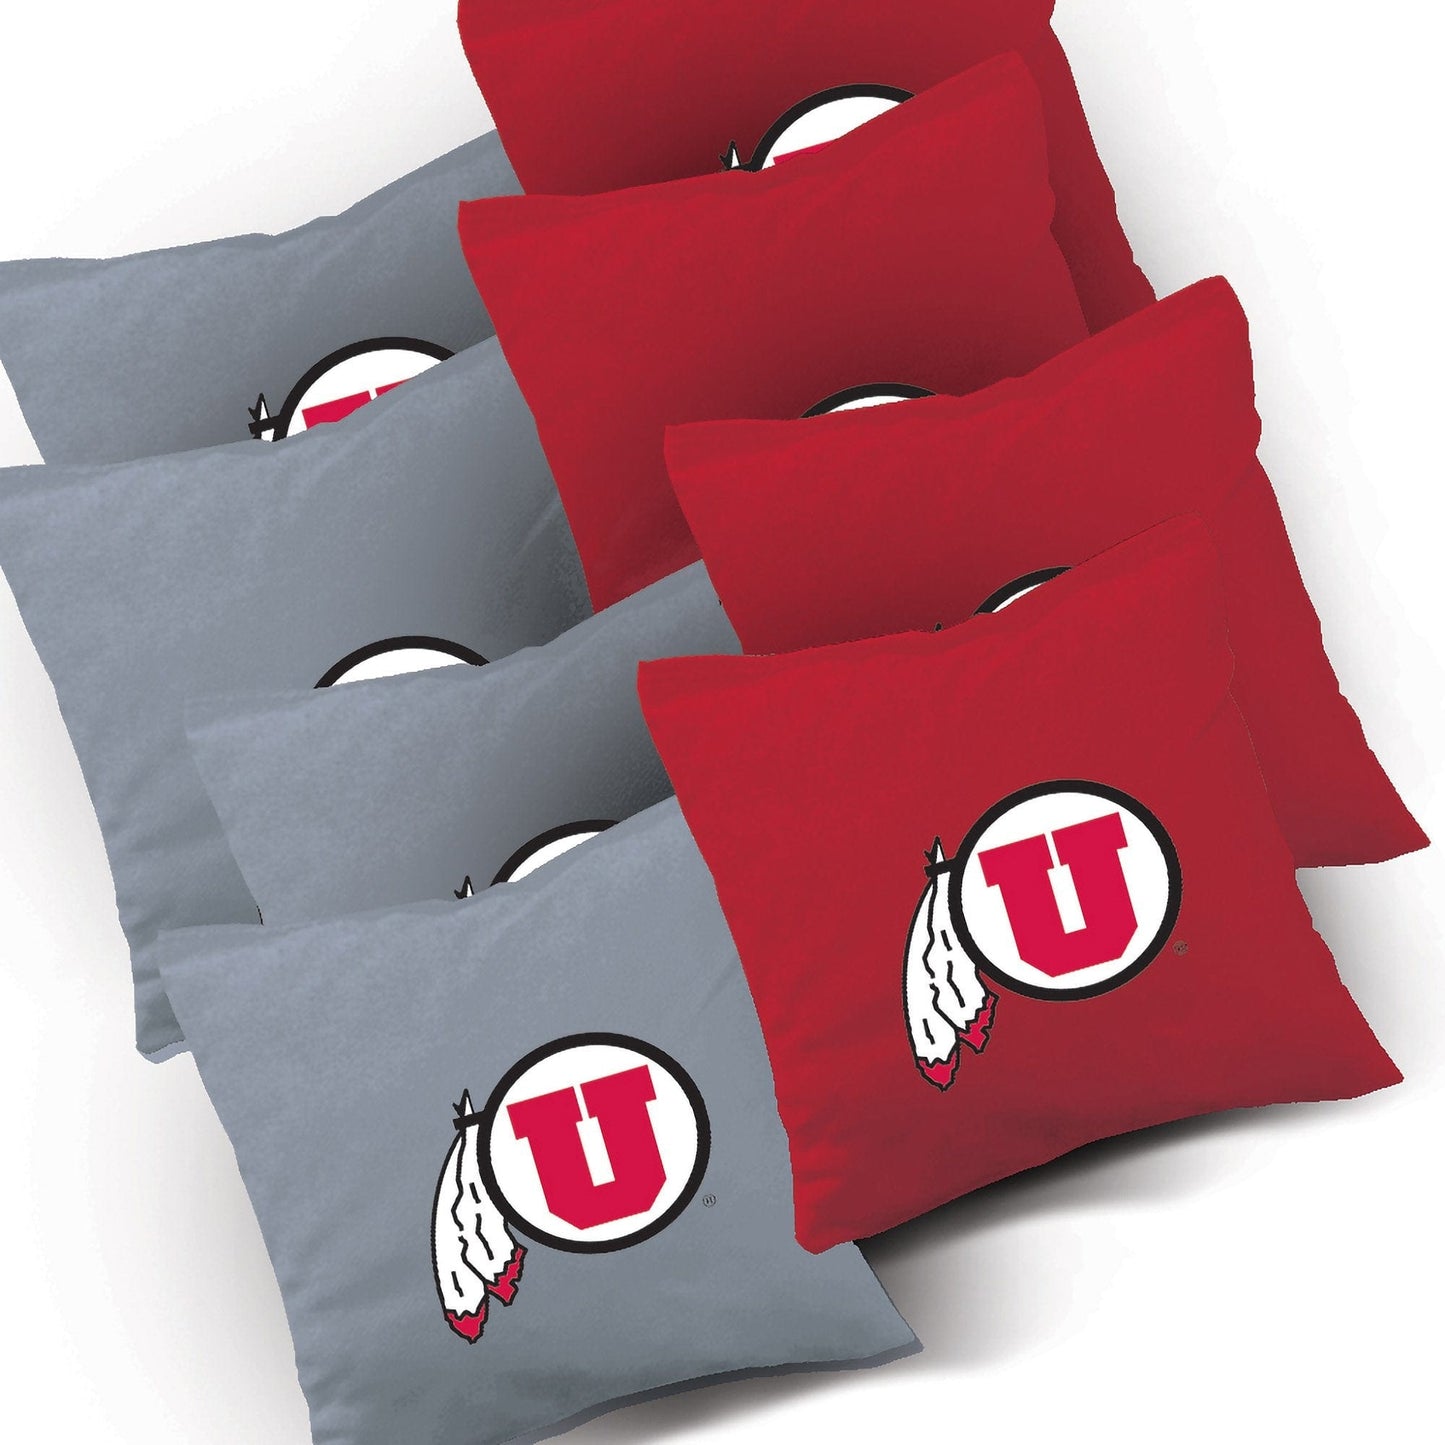 Utah Utes Stained Pyramid team logo corn hole bags